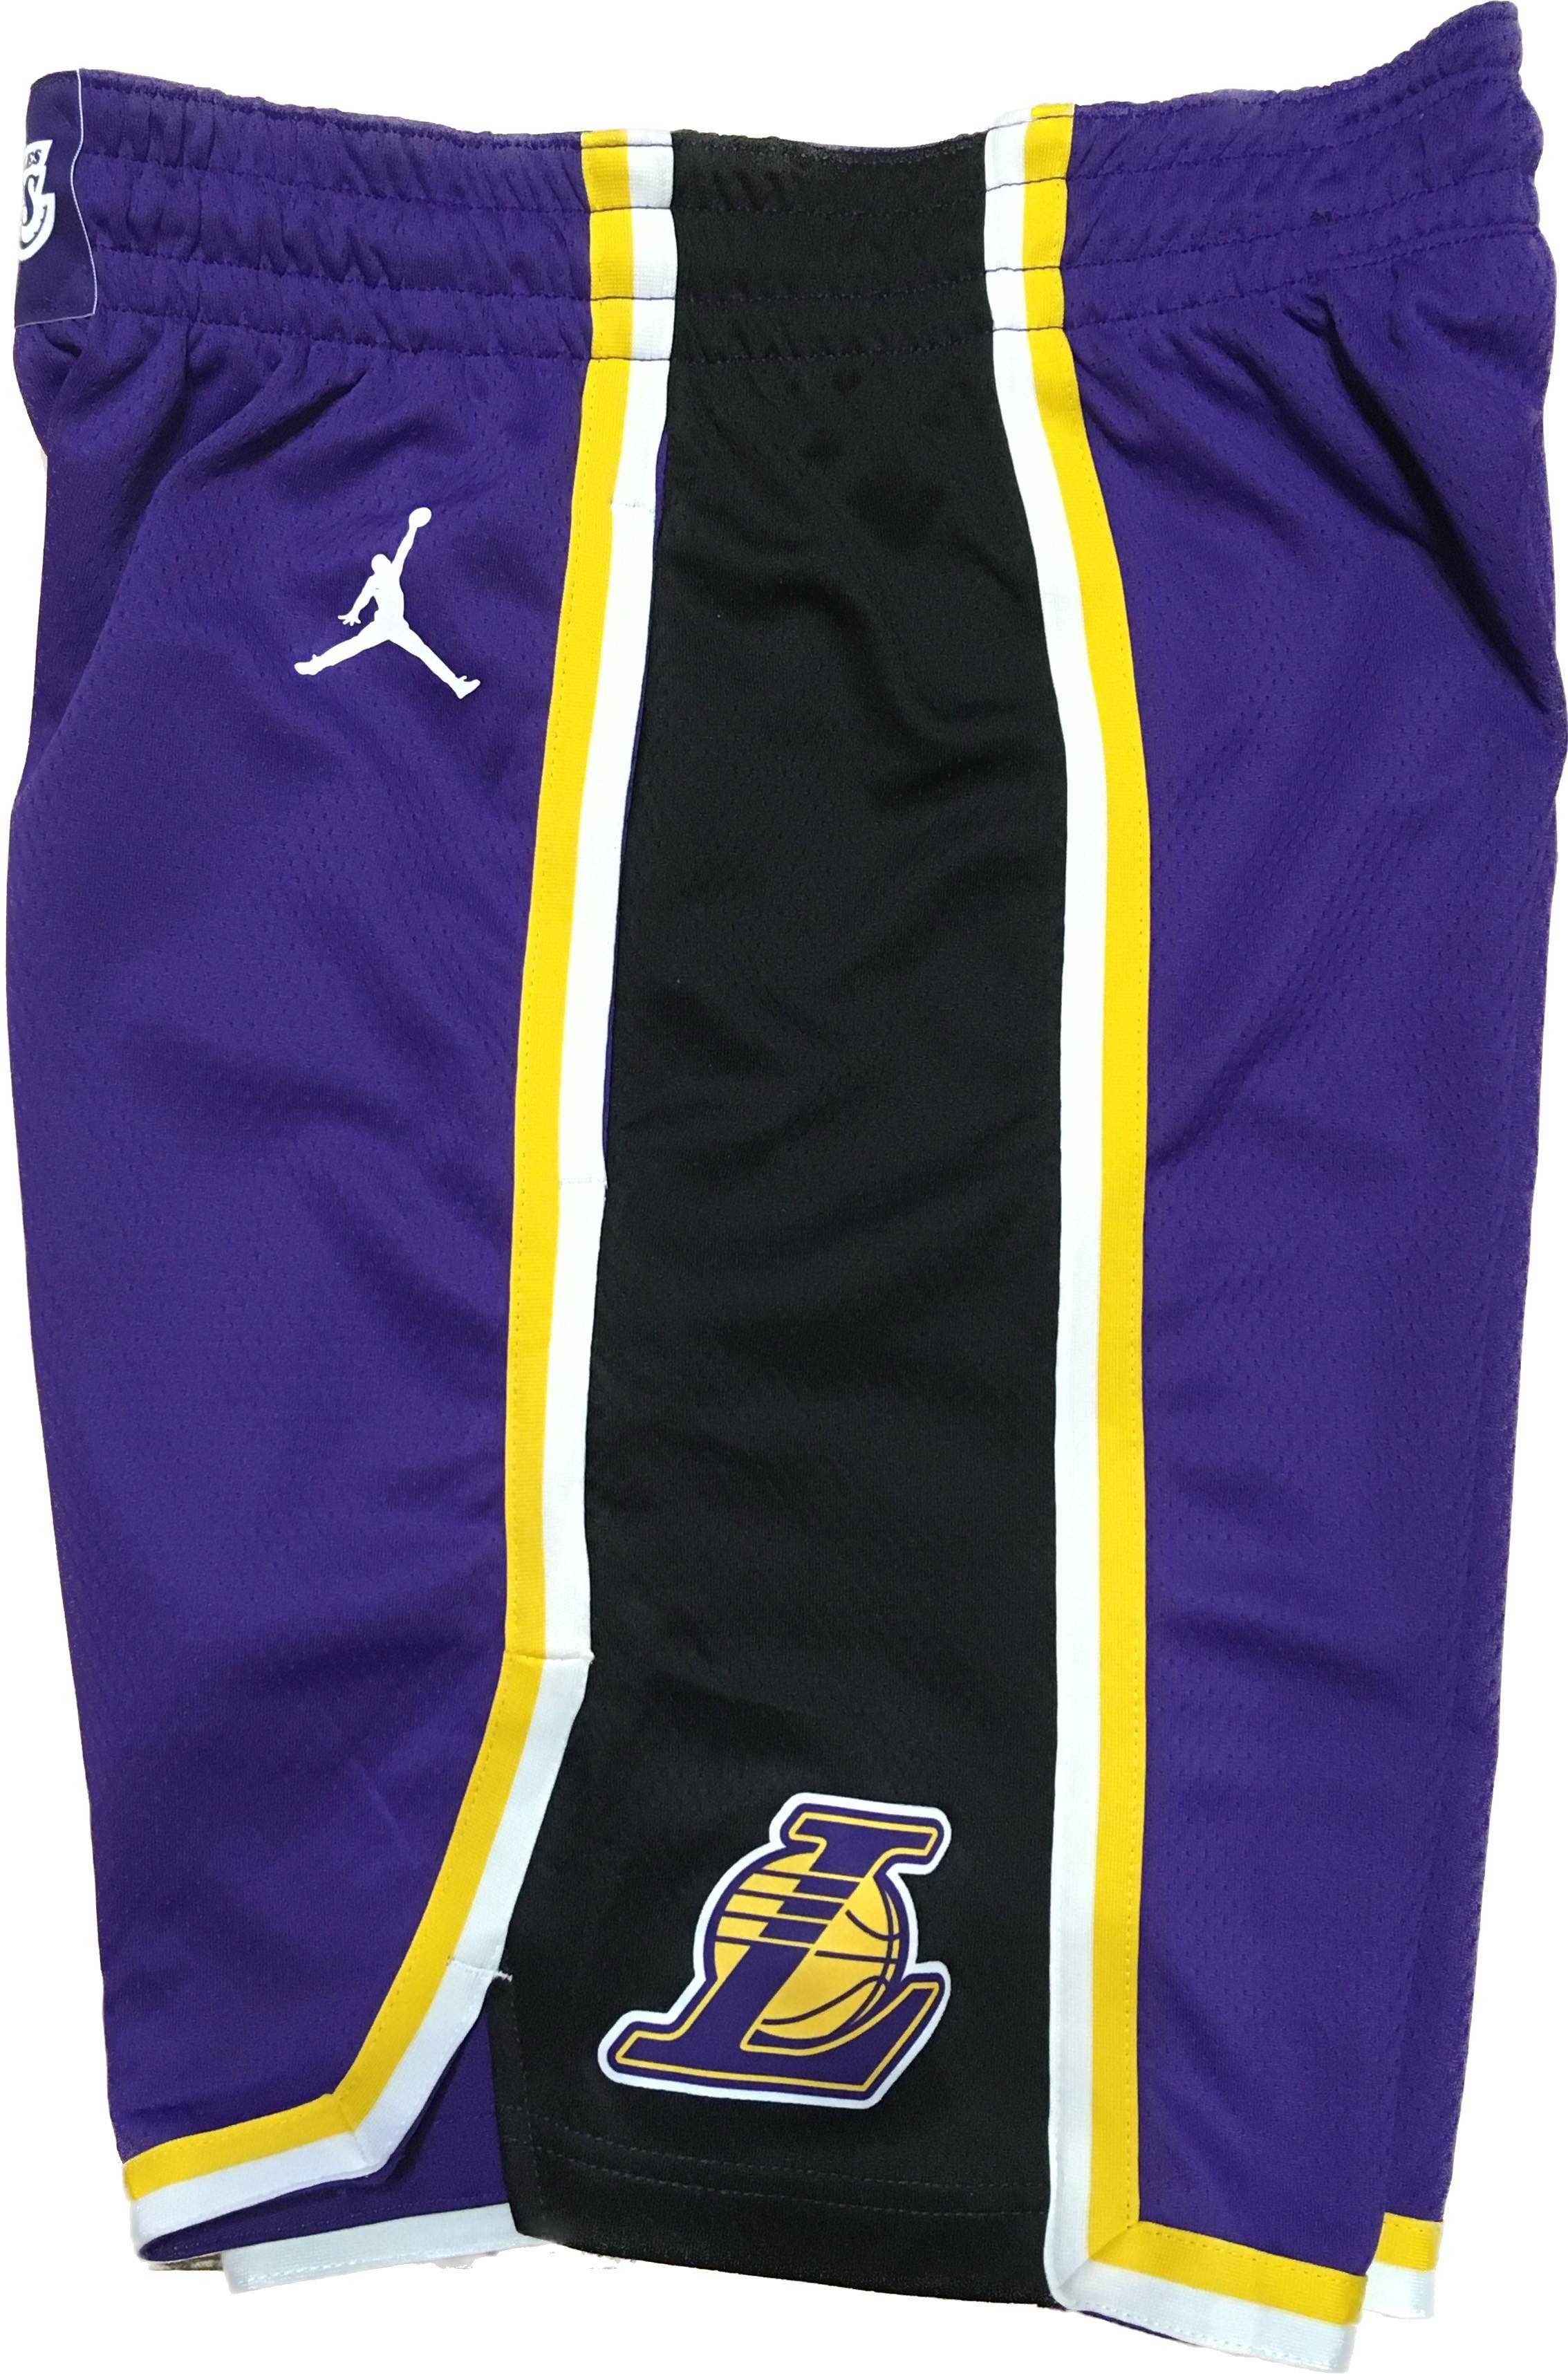 Шорты баскетбольные Nike Jordan NBA Los Angeles Lakers. S размер